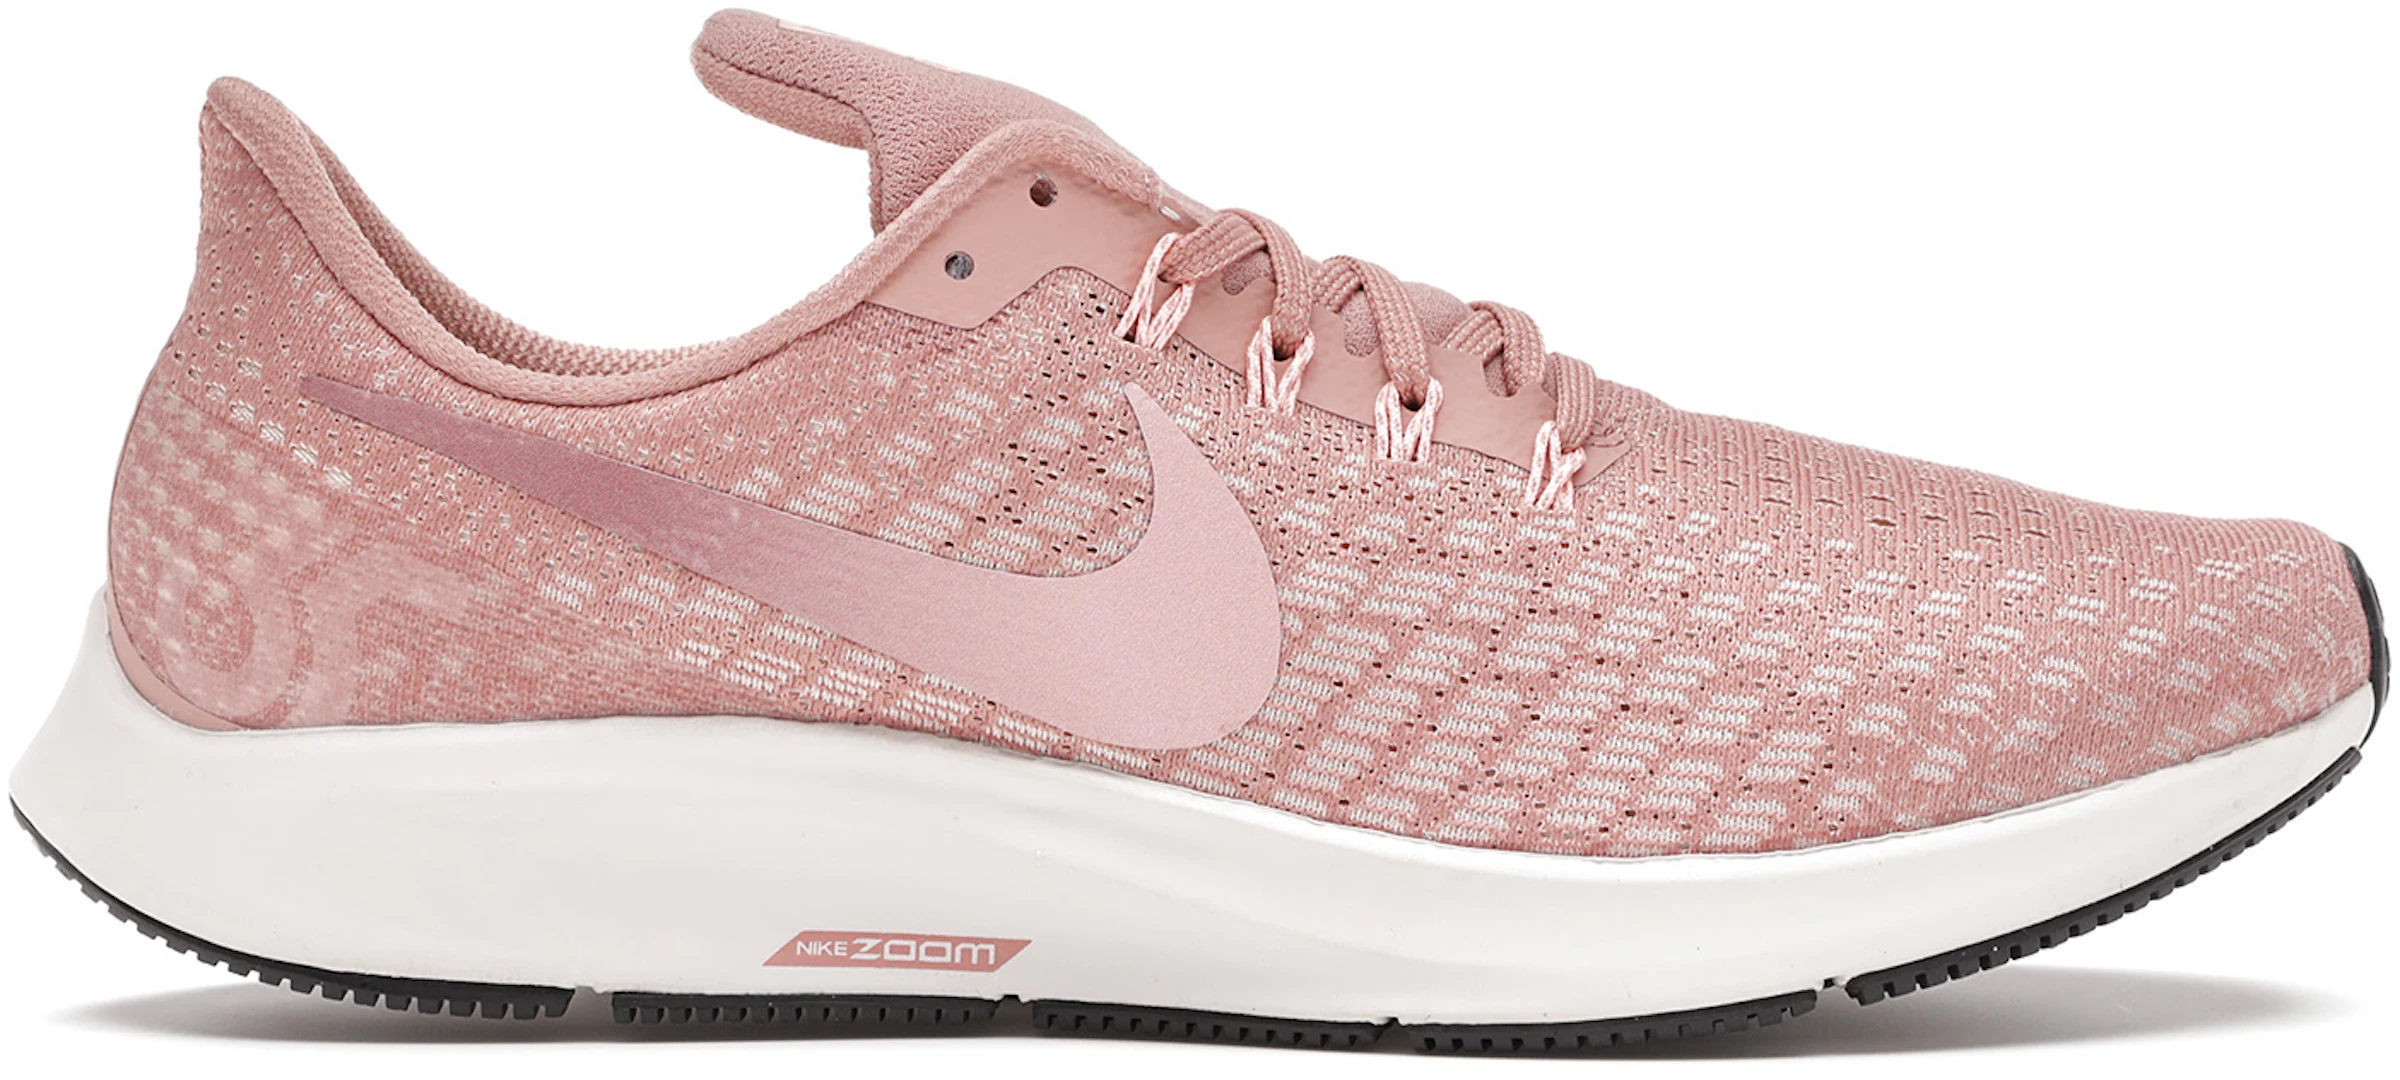 Nike Zoom Pegasus 35 Rust Pink (Women's) - 942855-603 - US